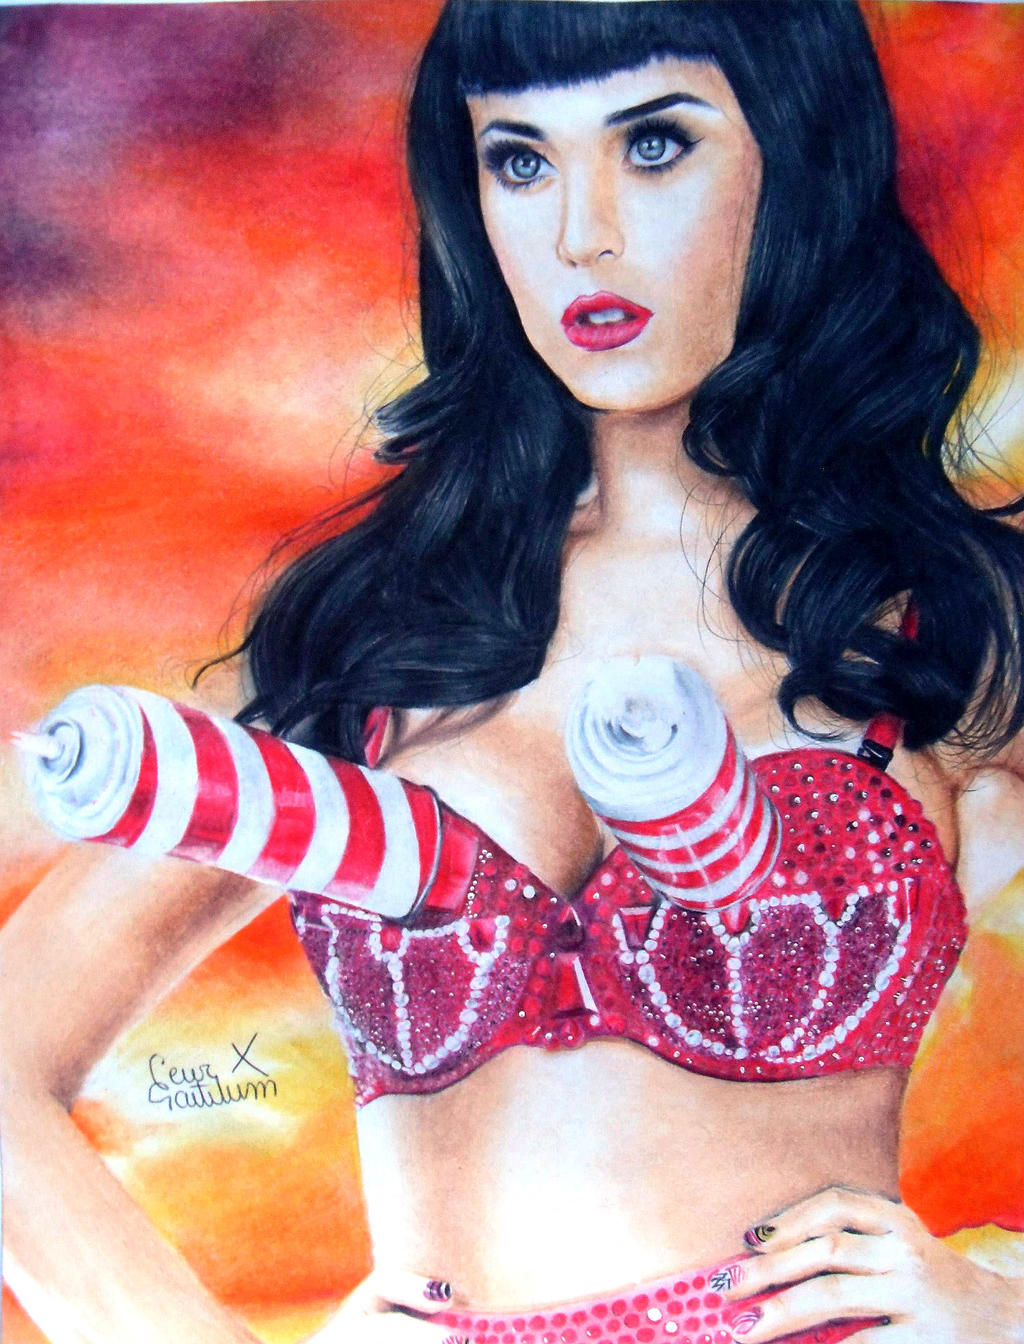 Katy Perry - California Girls Whipped Cream by CesarGastelum on DeviantArt